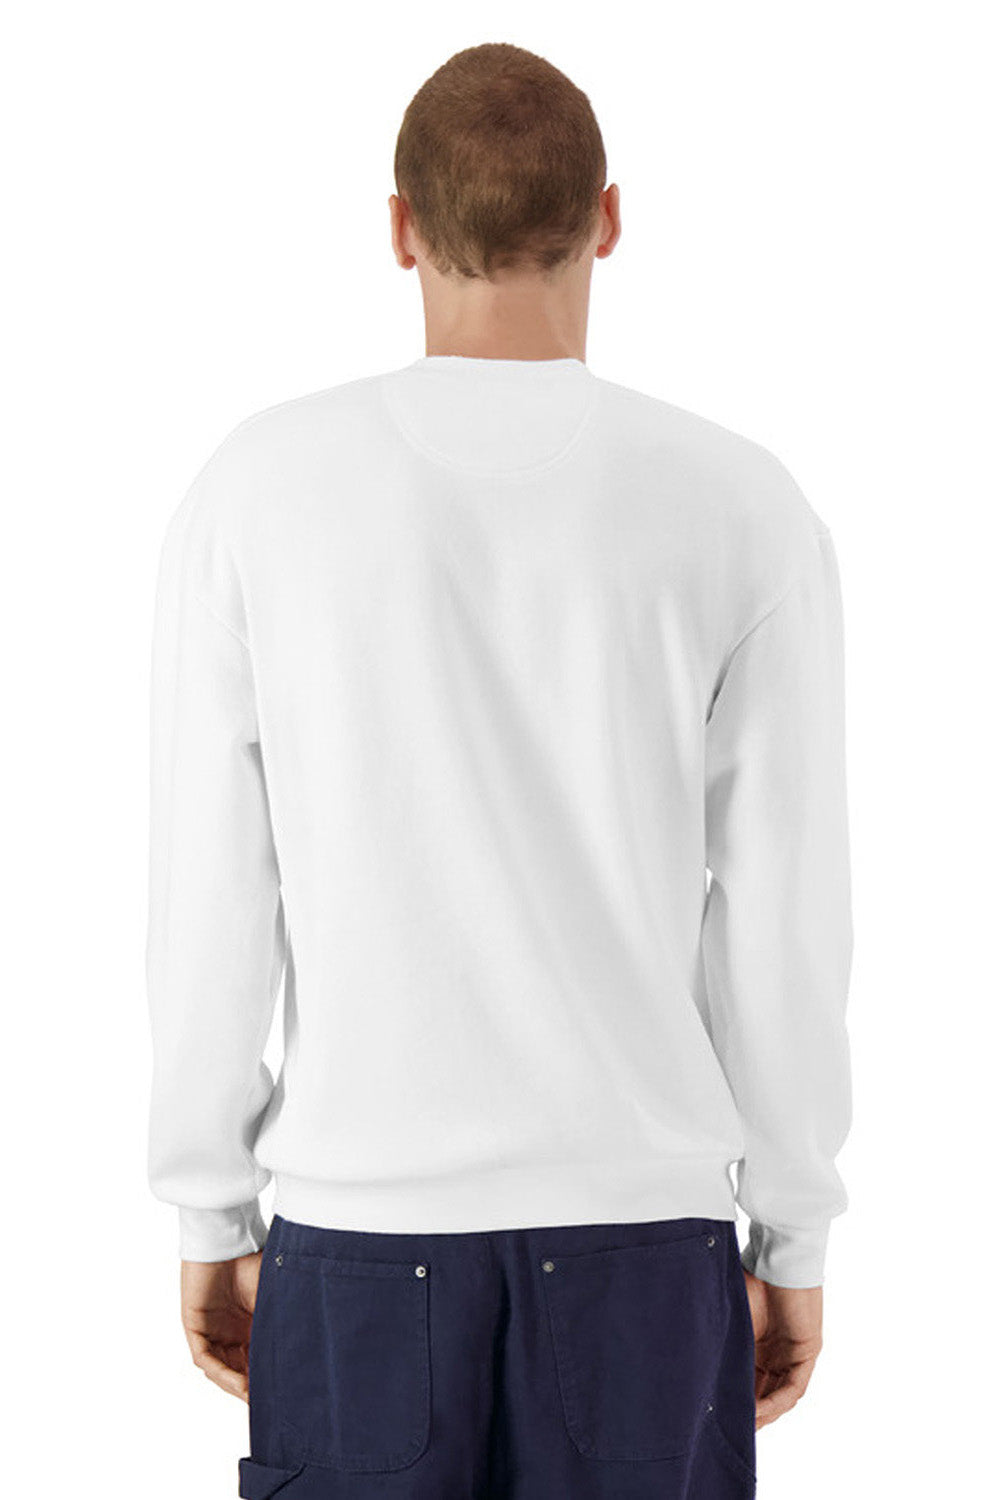 American Apparel RF496 Mens ReFlex Fleece Crewneck Sweatshirt White Model Back